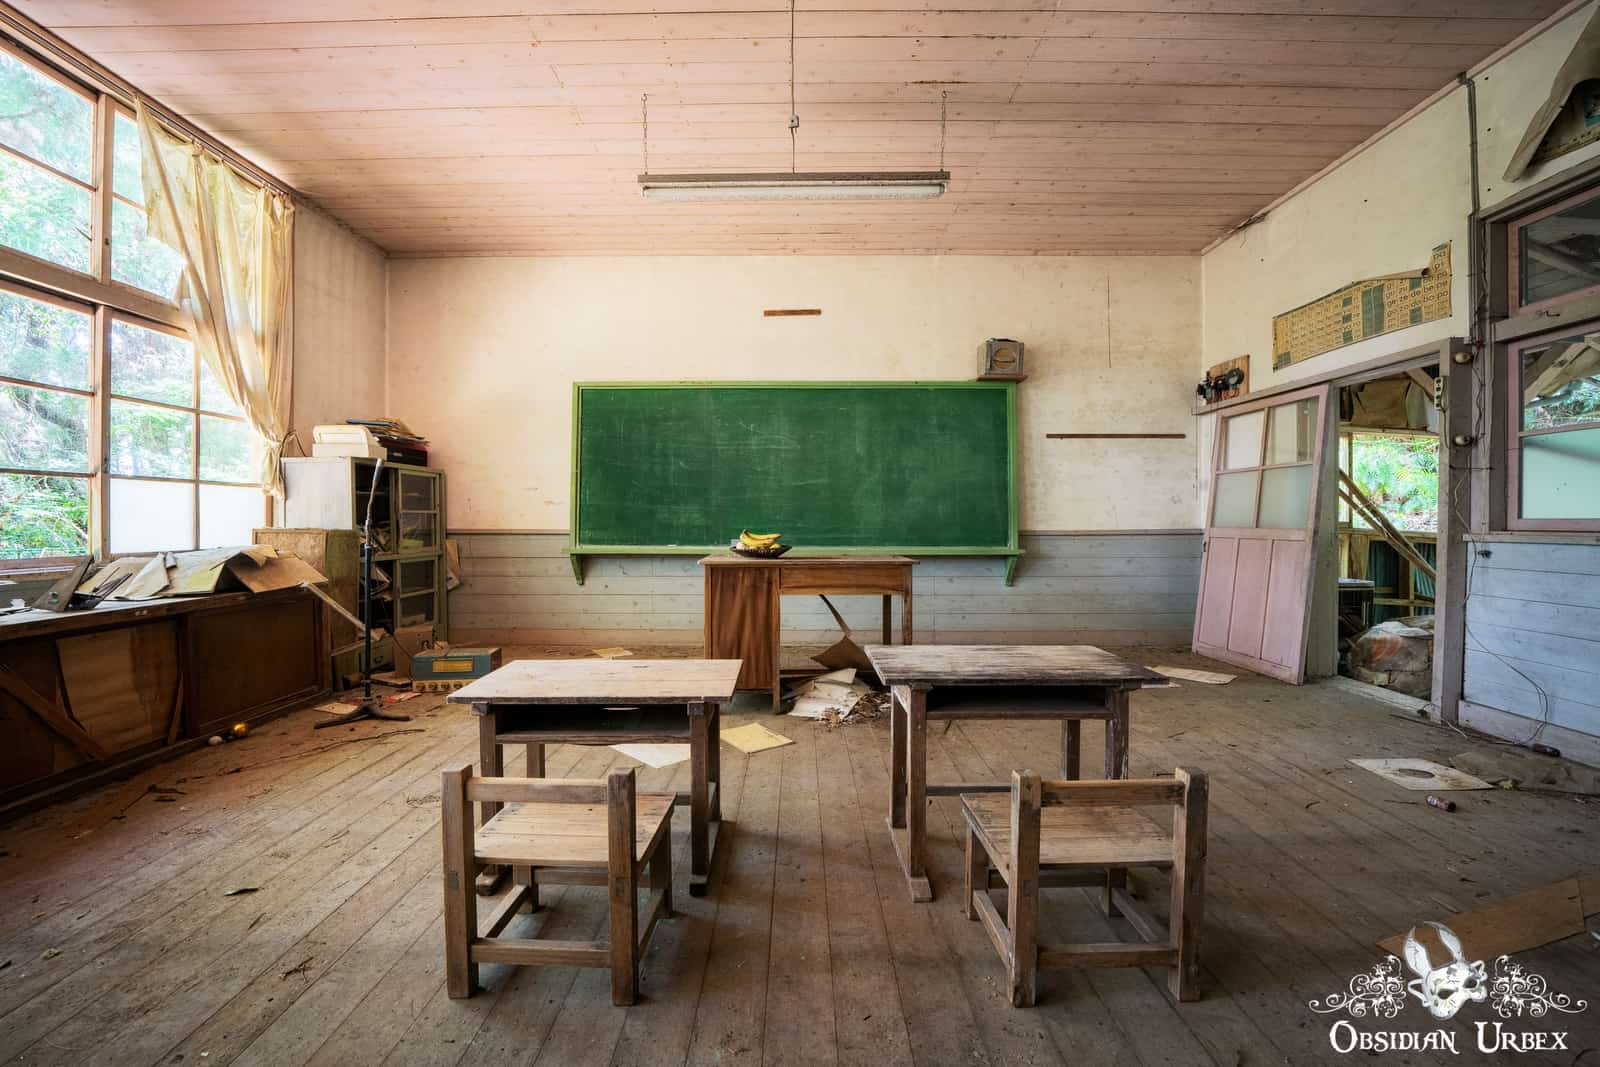 shizuoka-mountain-school-japan-haikyo-ruined-school-childrens-desks